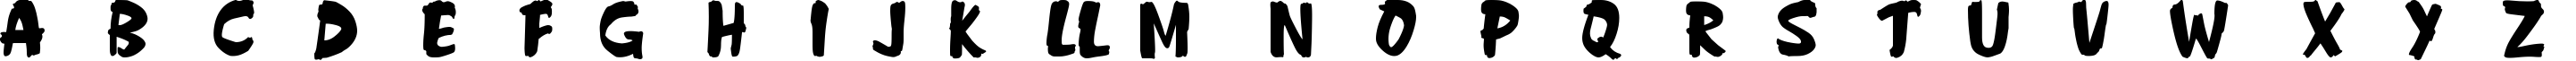 Пример написания английского алфавита шрифтом Anderson Fireball XL5